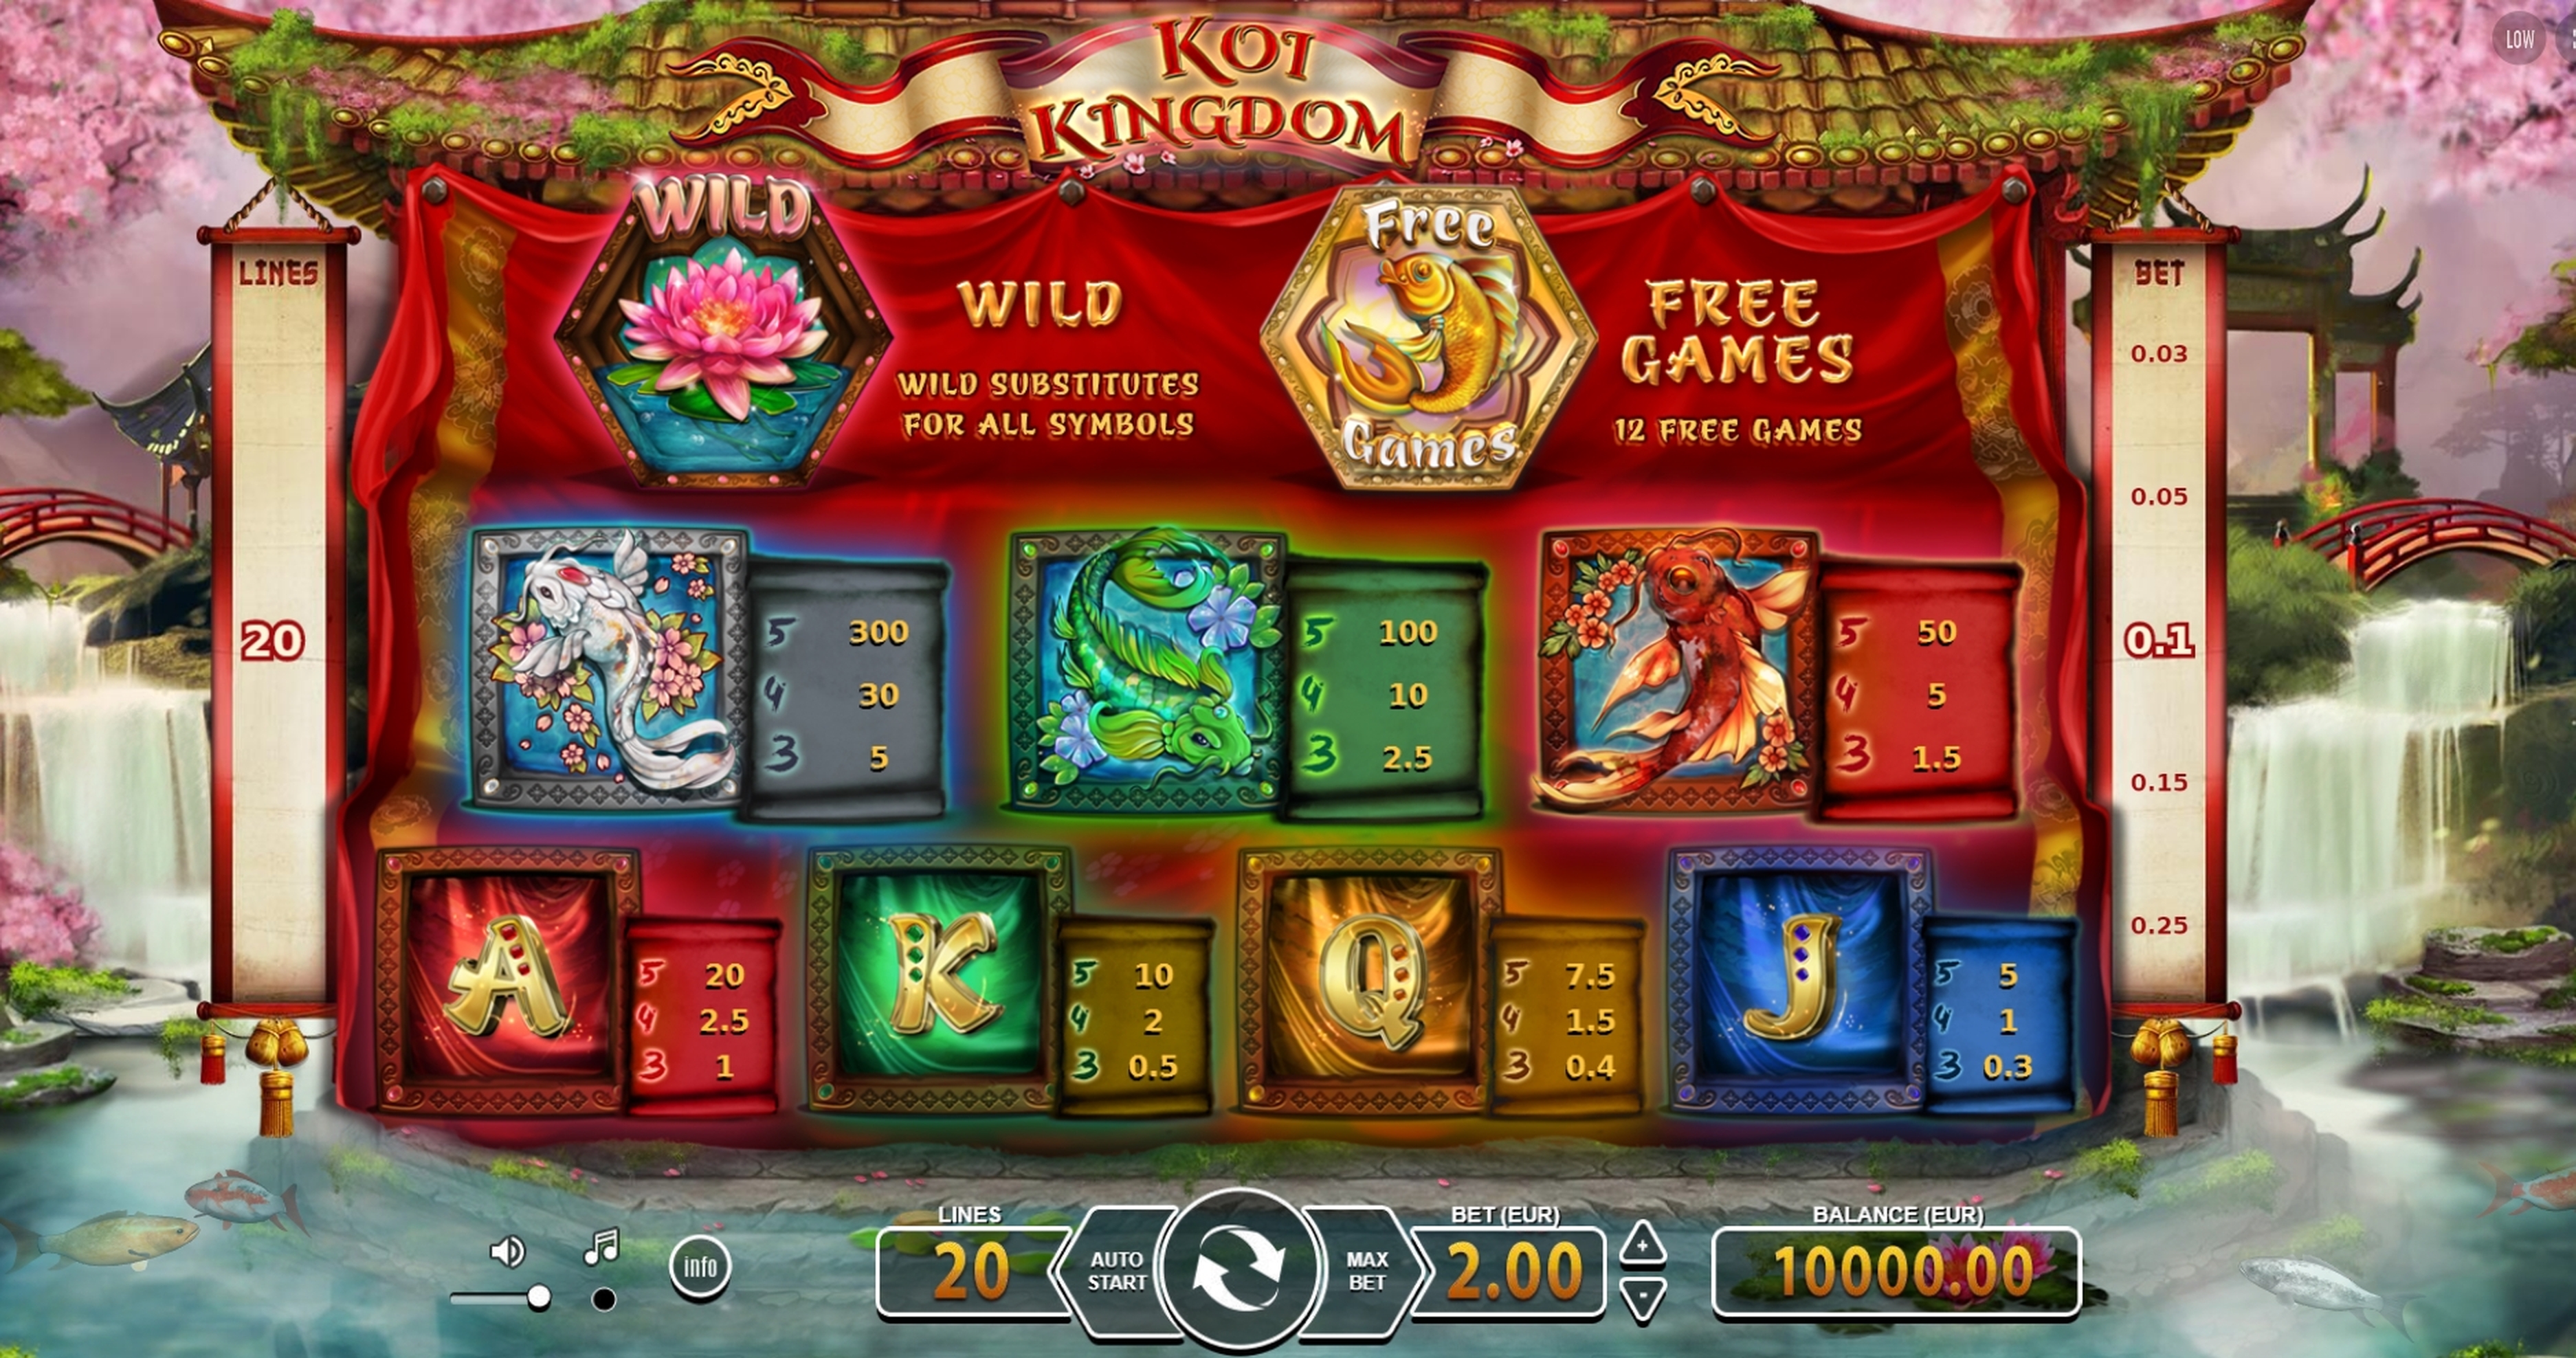 Info of Koi Kingdom Slot Game by BF Games